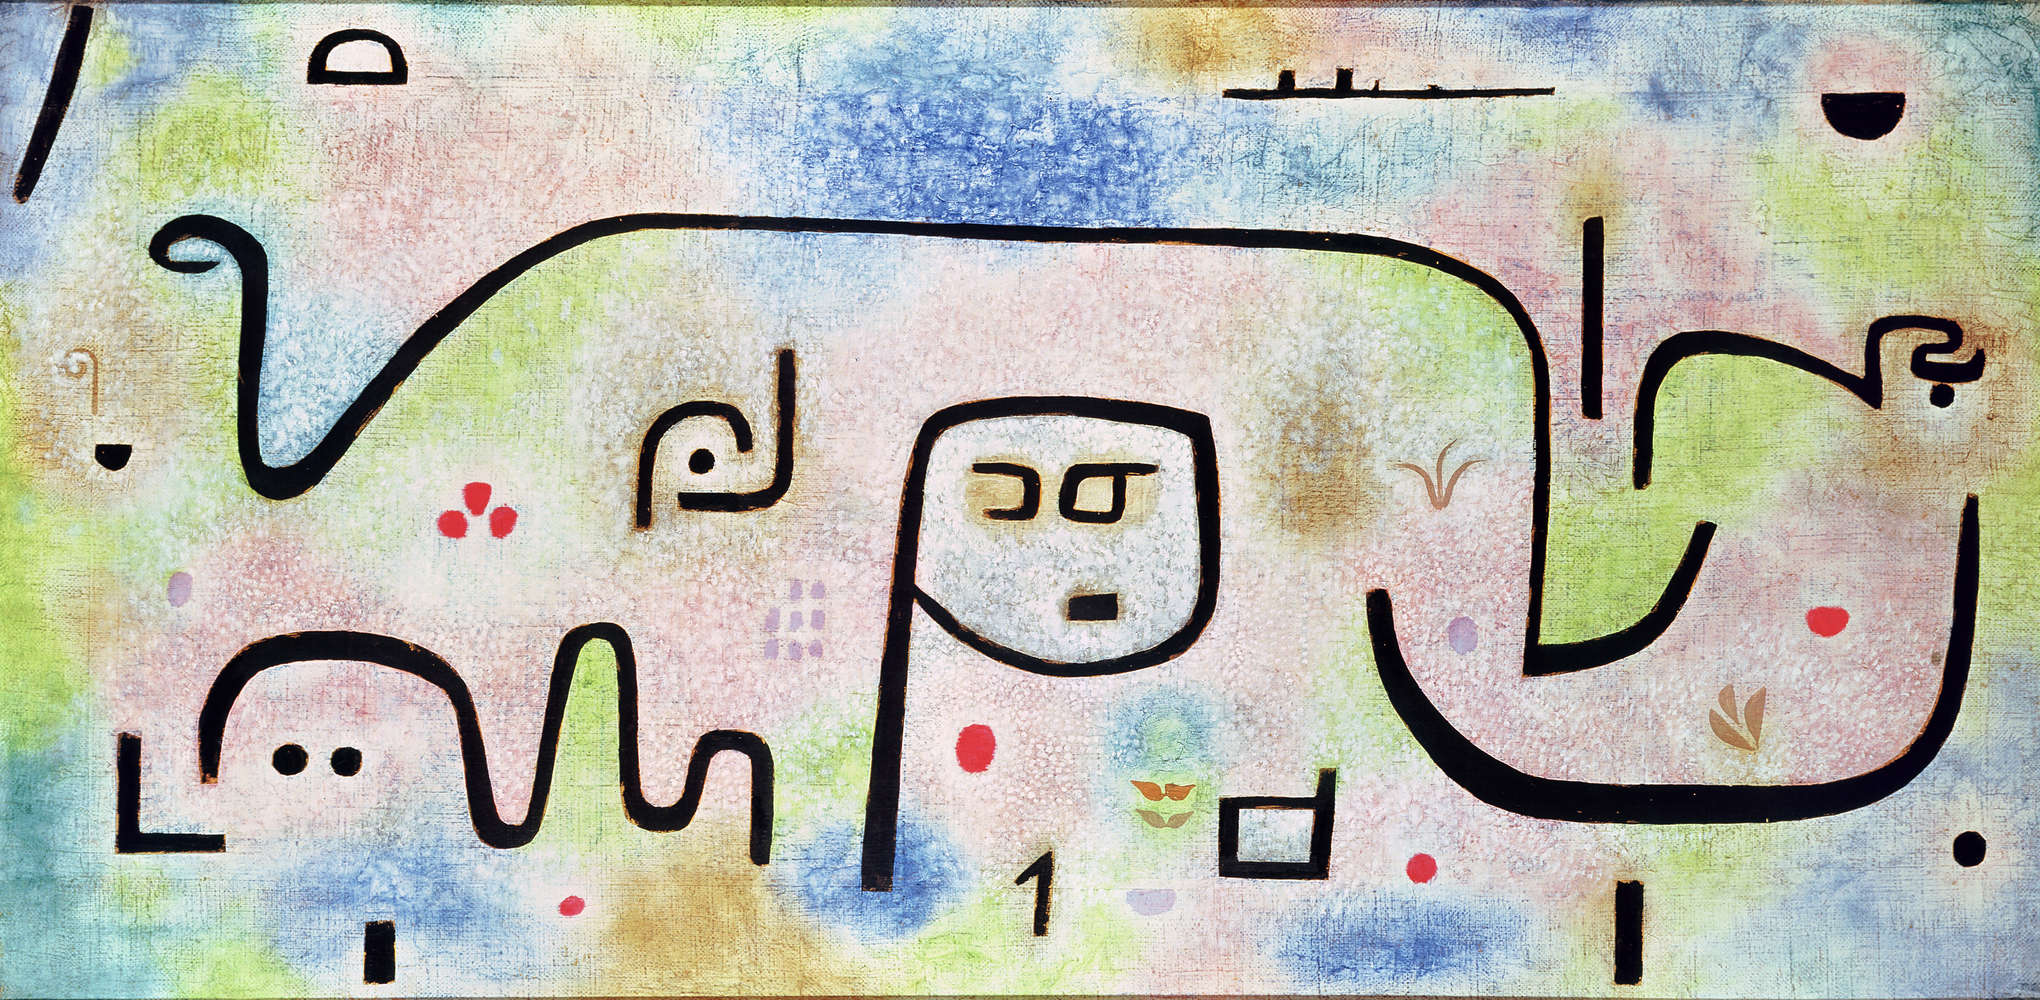             Fototapete "Insula Dulcamara" von Paul Klee
        